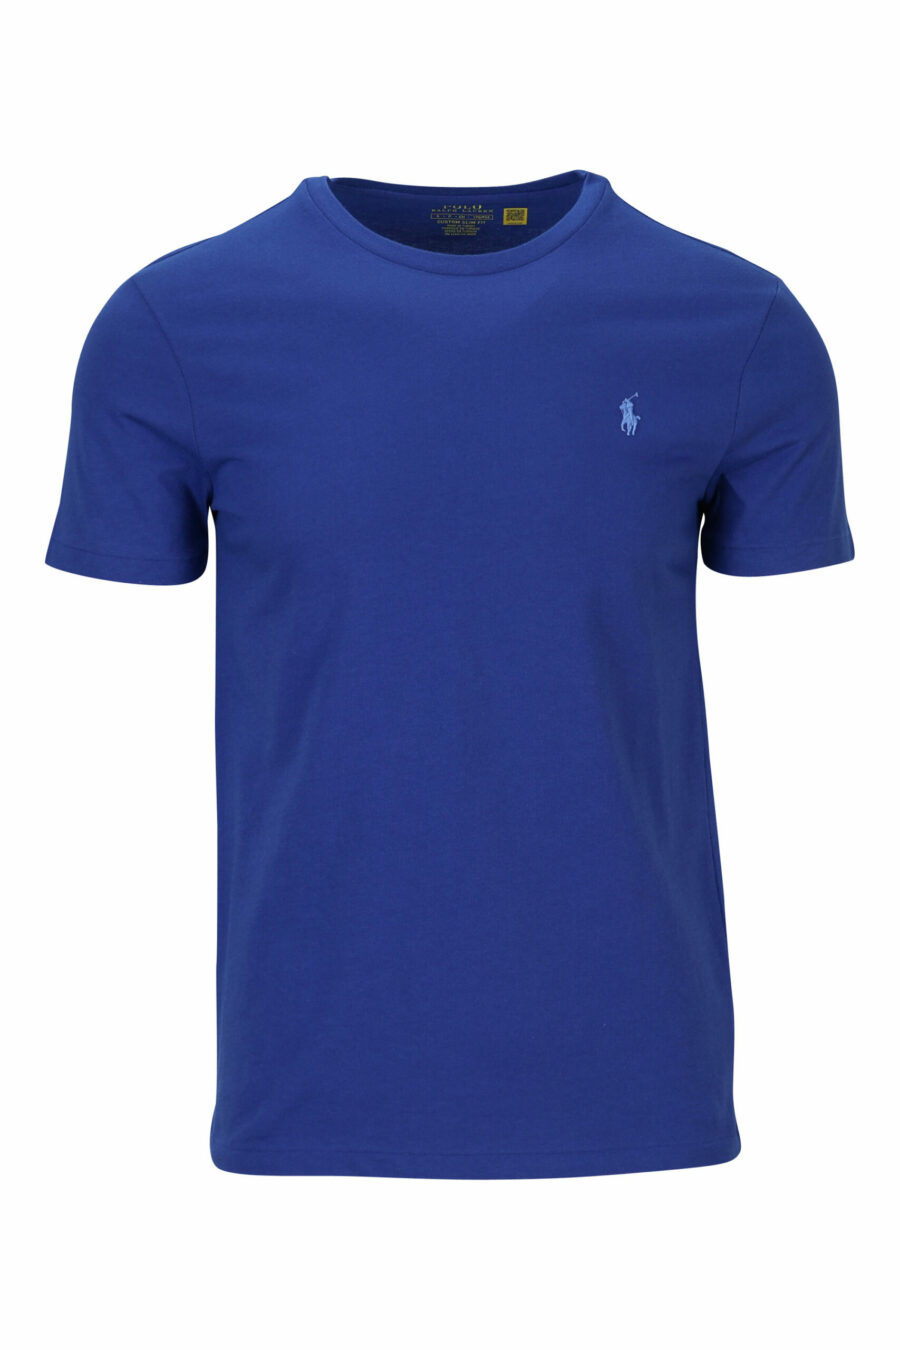 Tee-shirt bleu avec mini-logo "polo" - 3616535835214